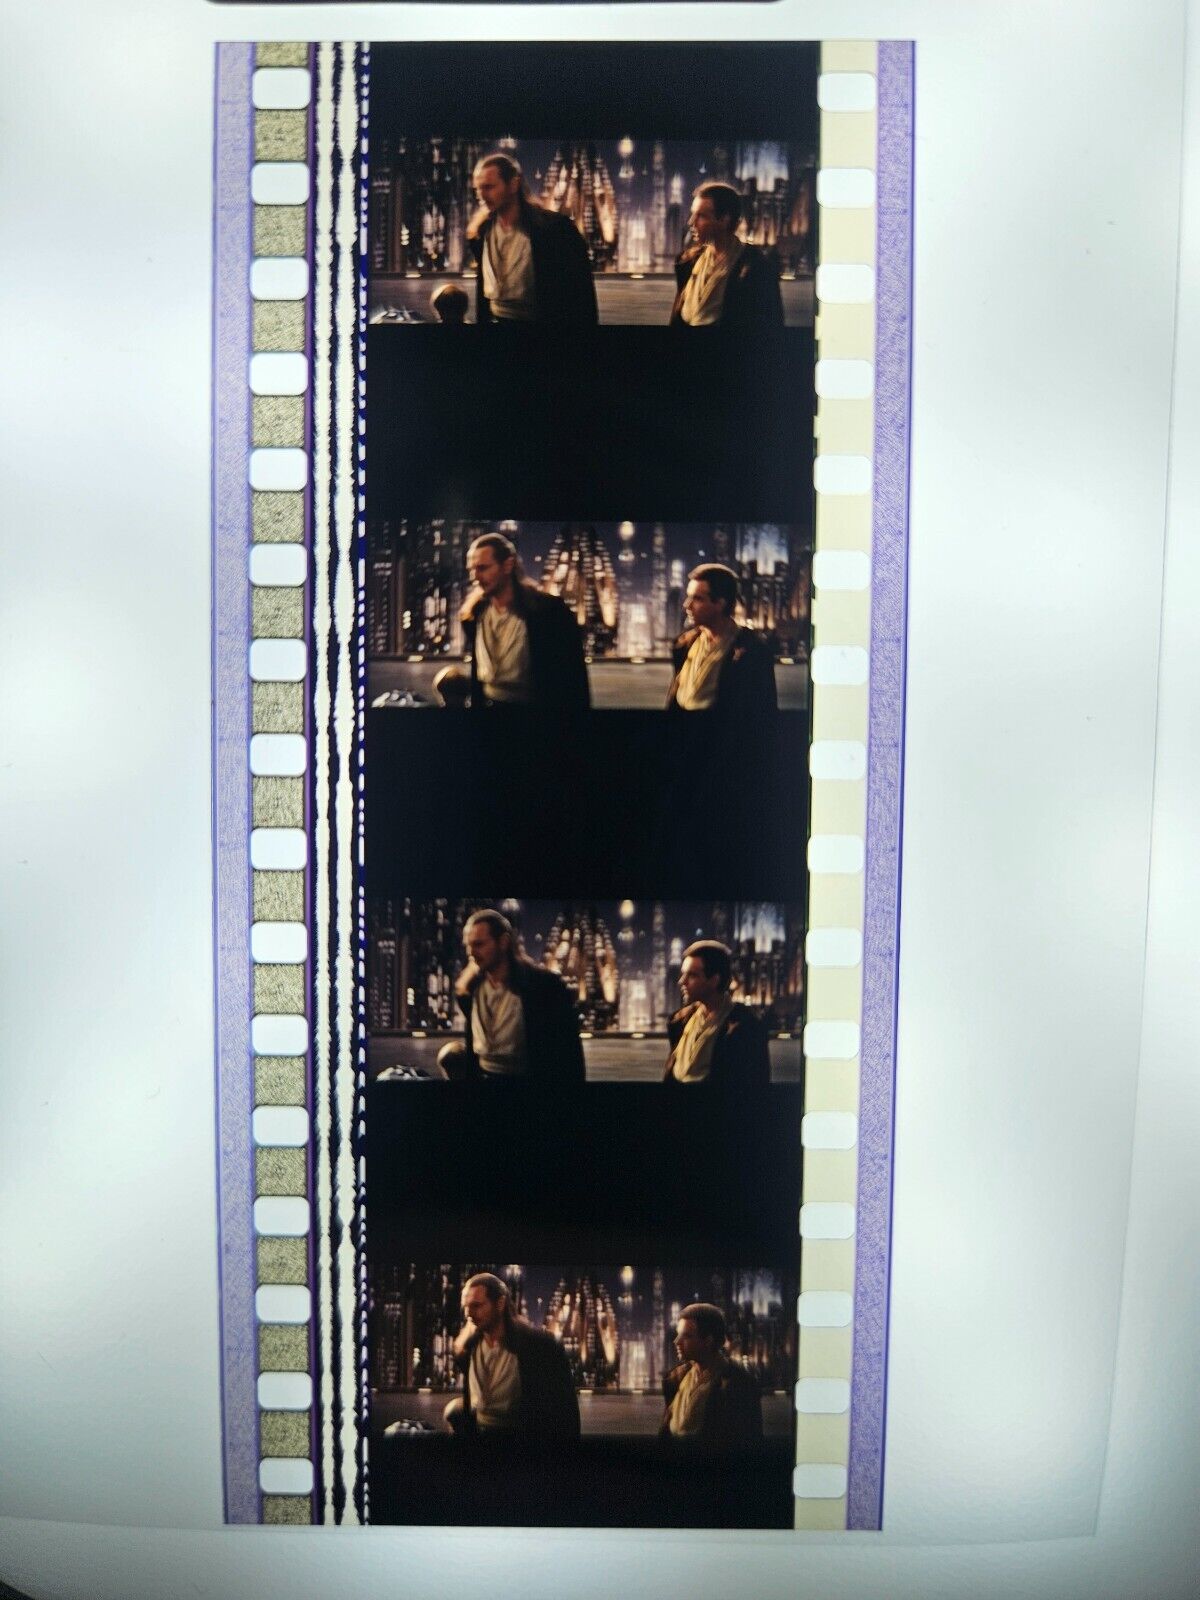 Obi-Wan Star Wars Episode 1 Phantom Menace 35mm Original Film Cells SW2077 Star Wars 35mm Film Cell - Hobby Gems